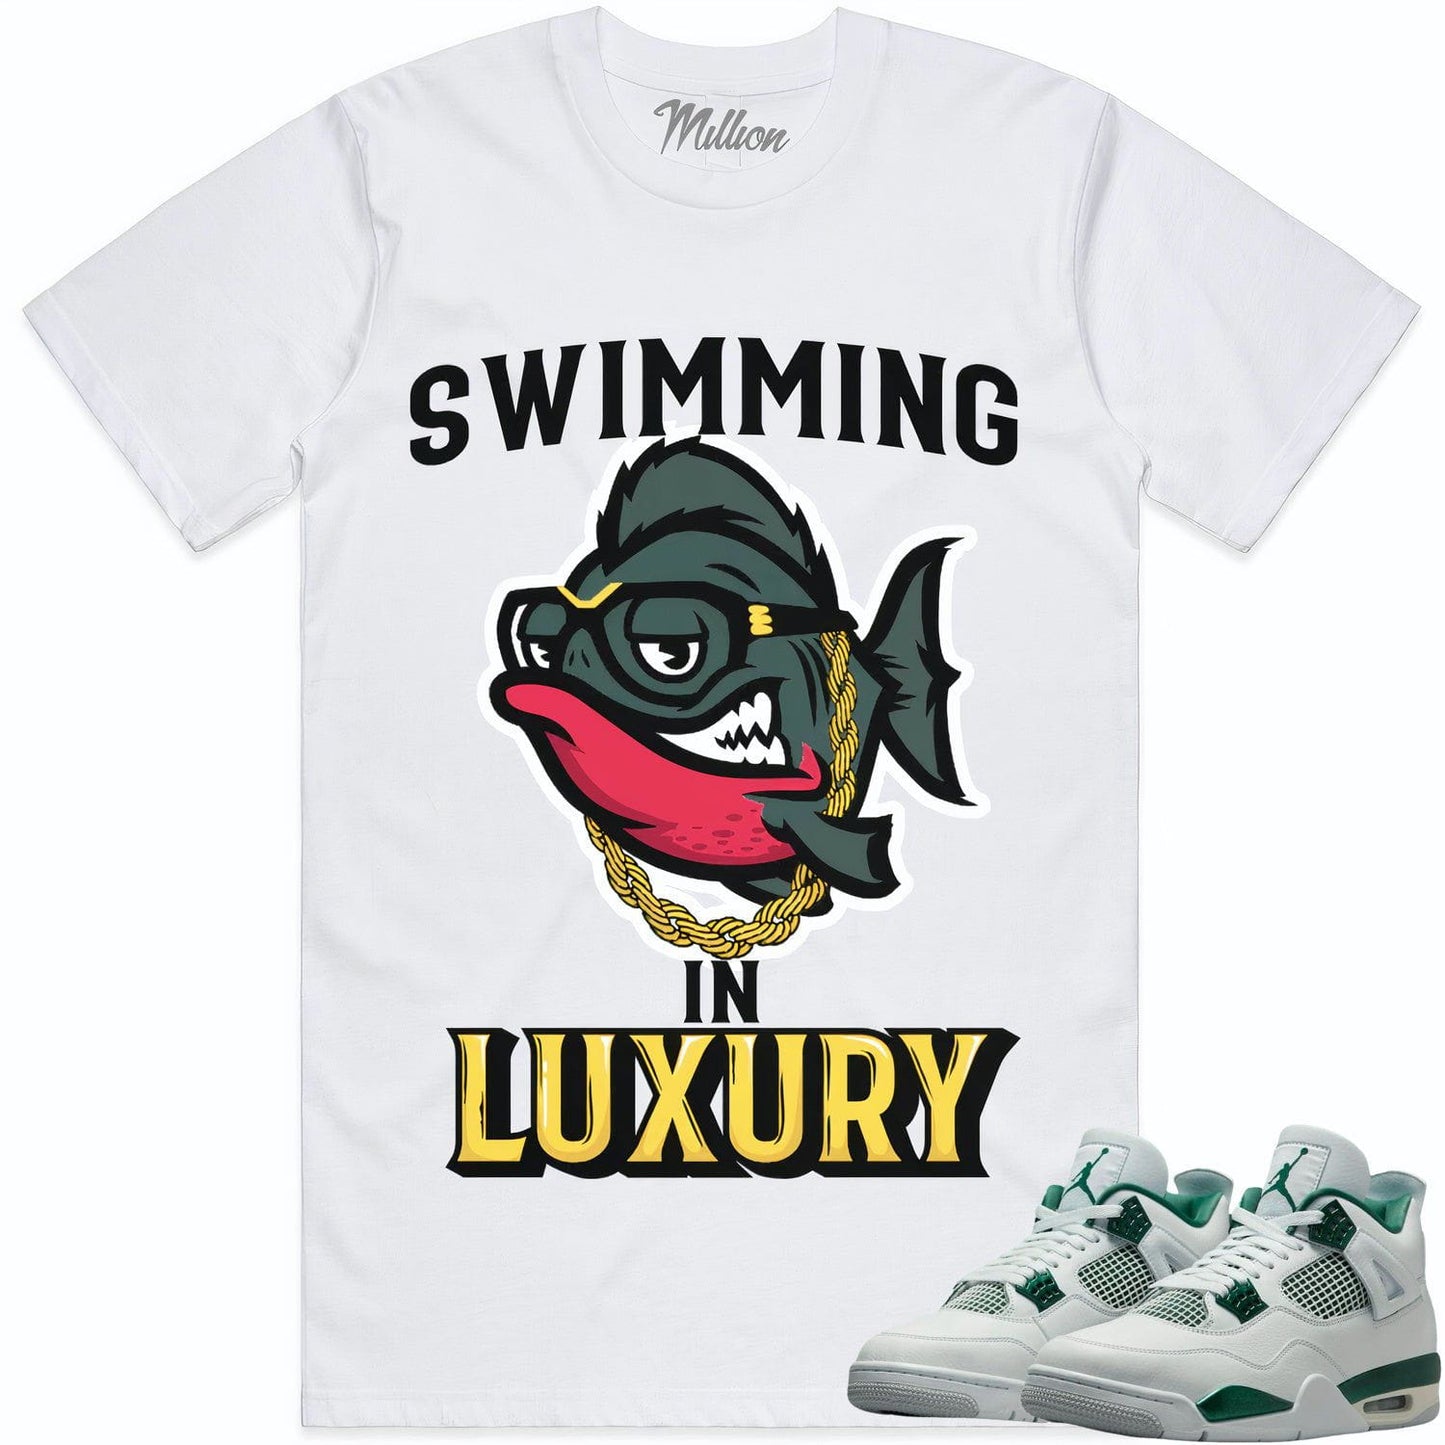 Oxidized Green 4s Shirt - Jordan 4 Oxidized Sneaker Tees - Swimming